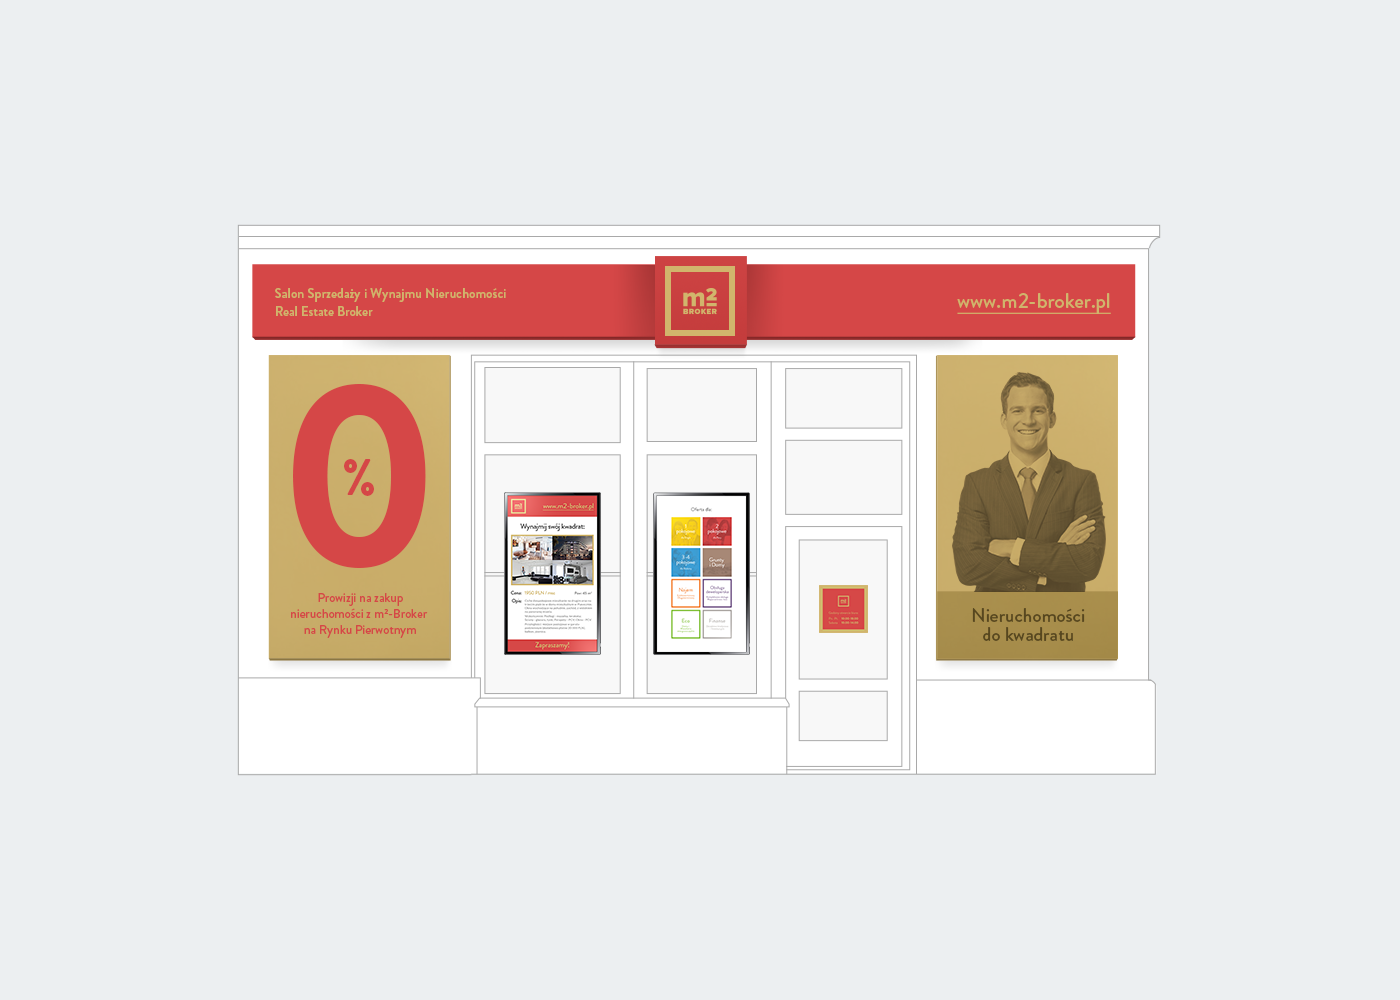 real estate square gold red design business card Stationery letterhead flat house home broker apartment digital Website